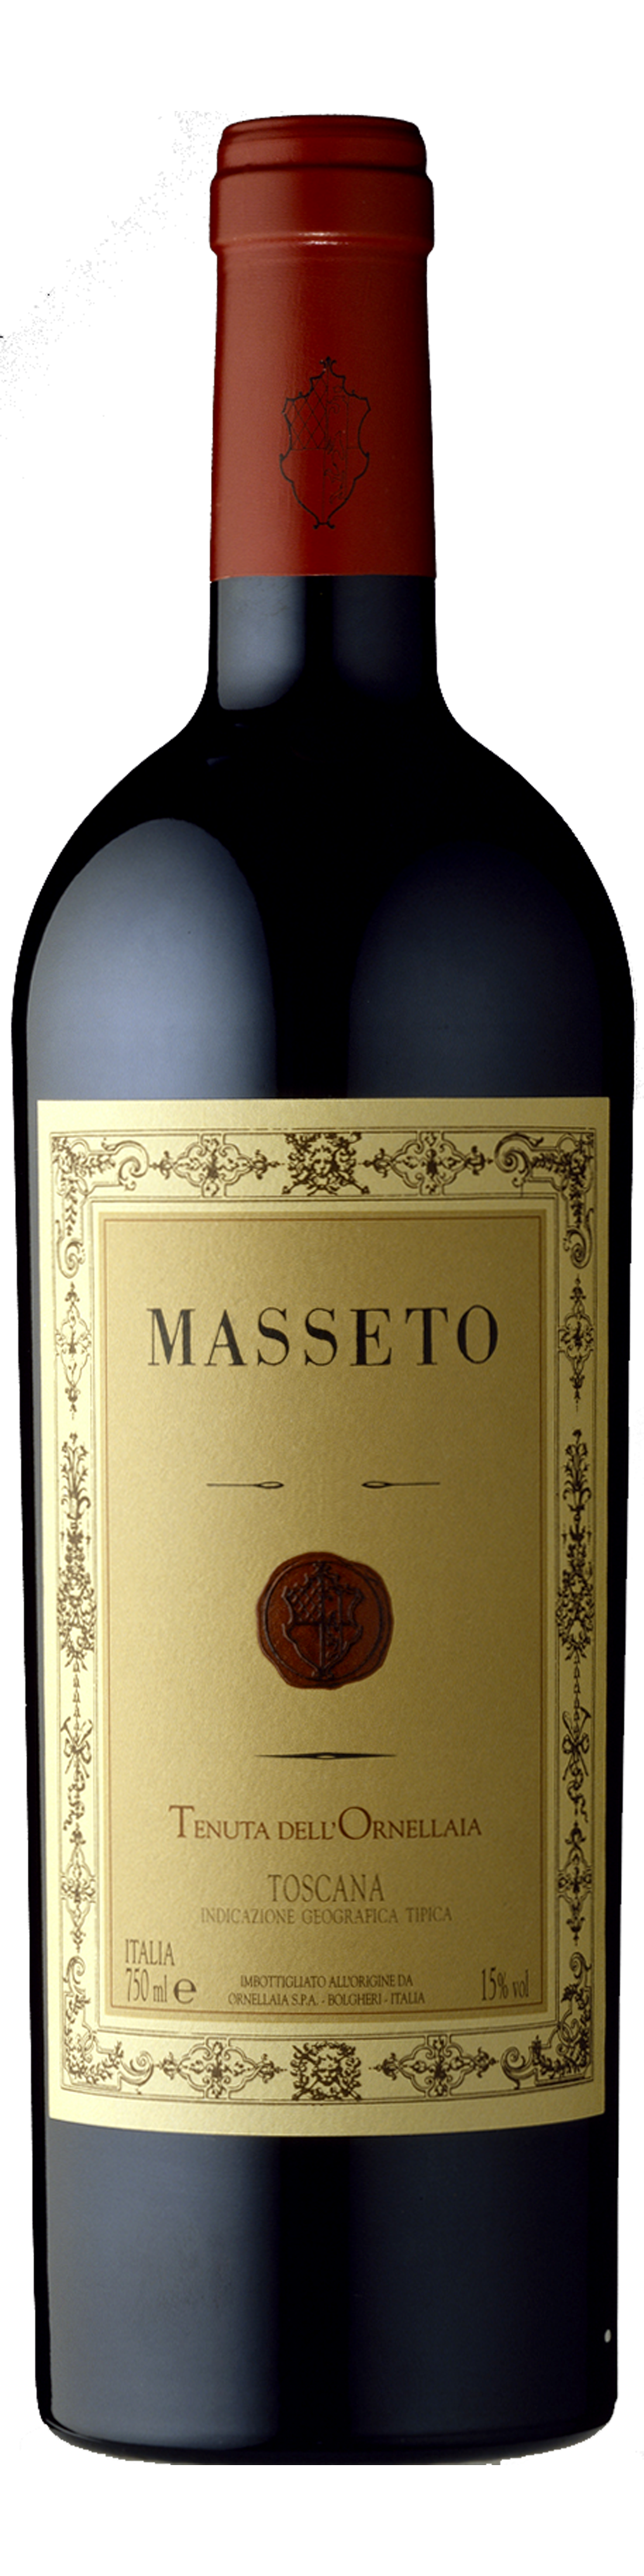 Bottle shot of 2005 Masseto